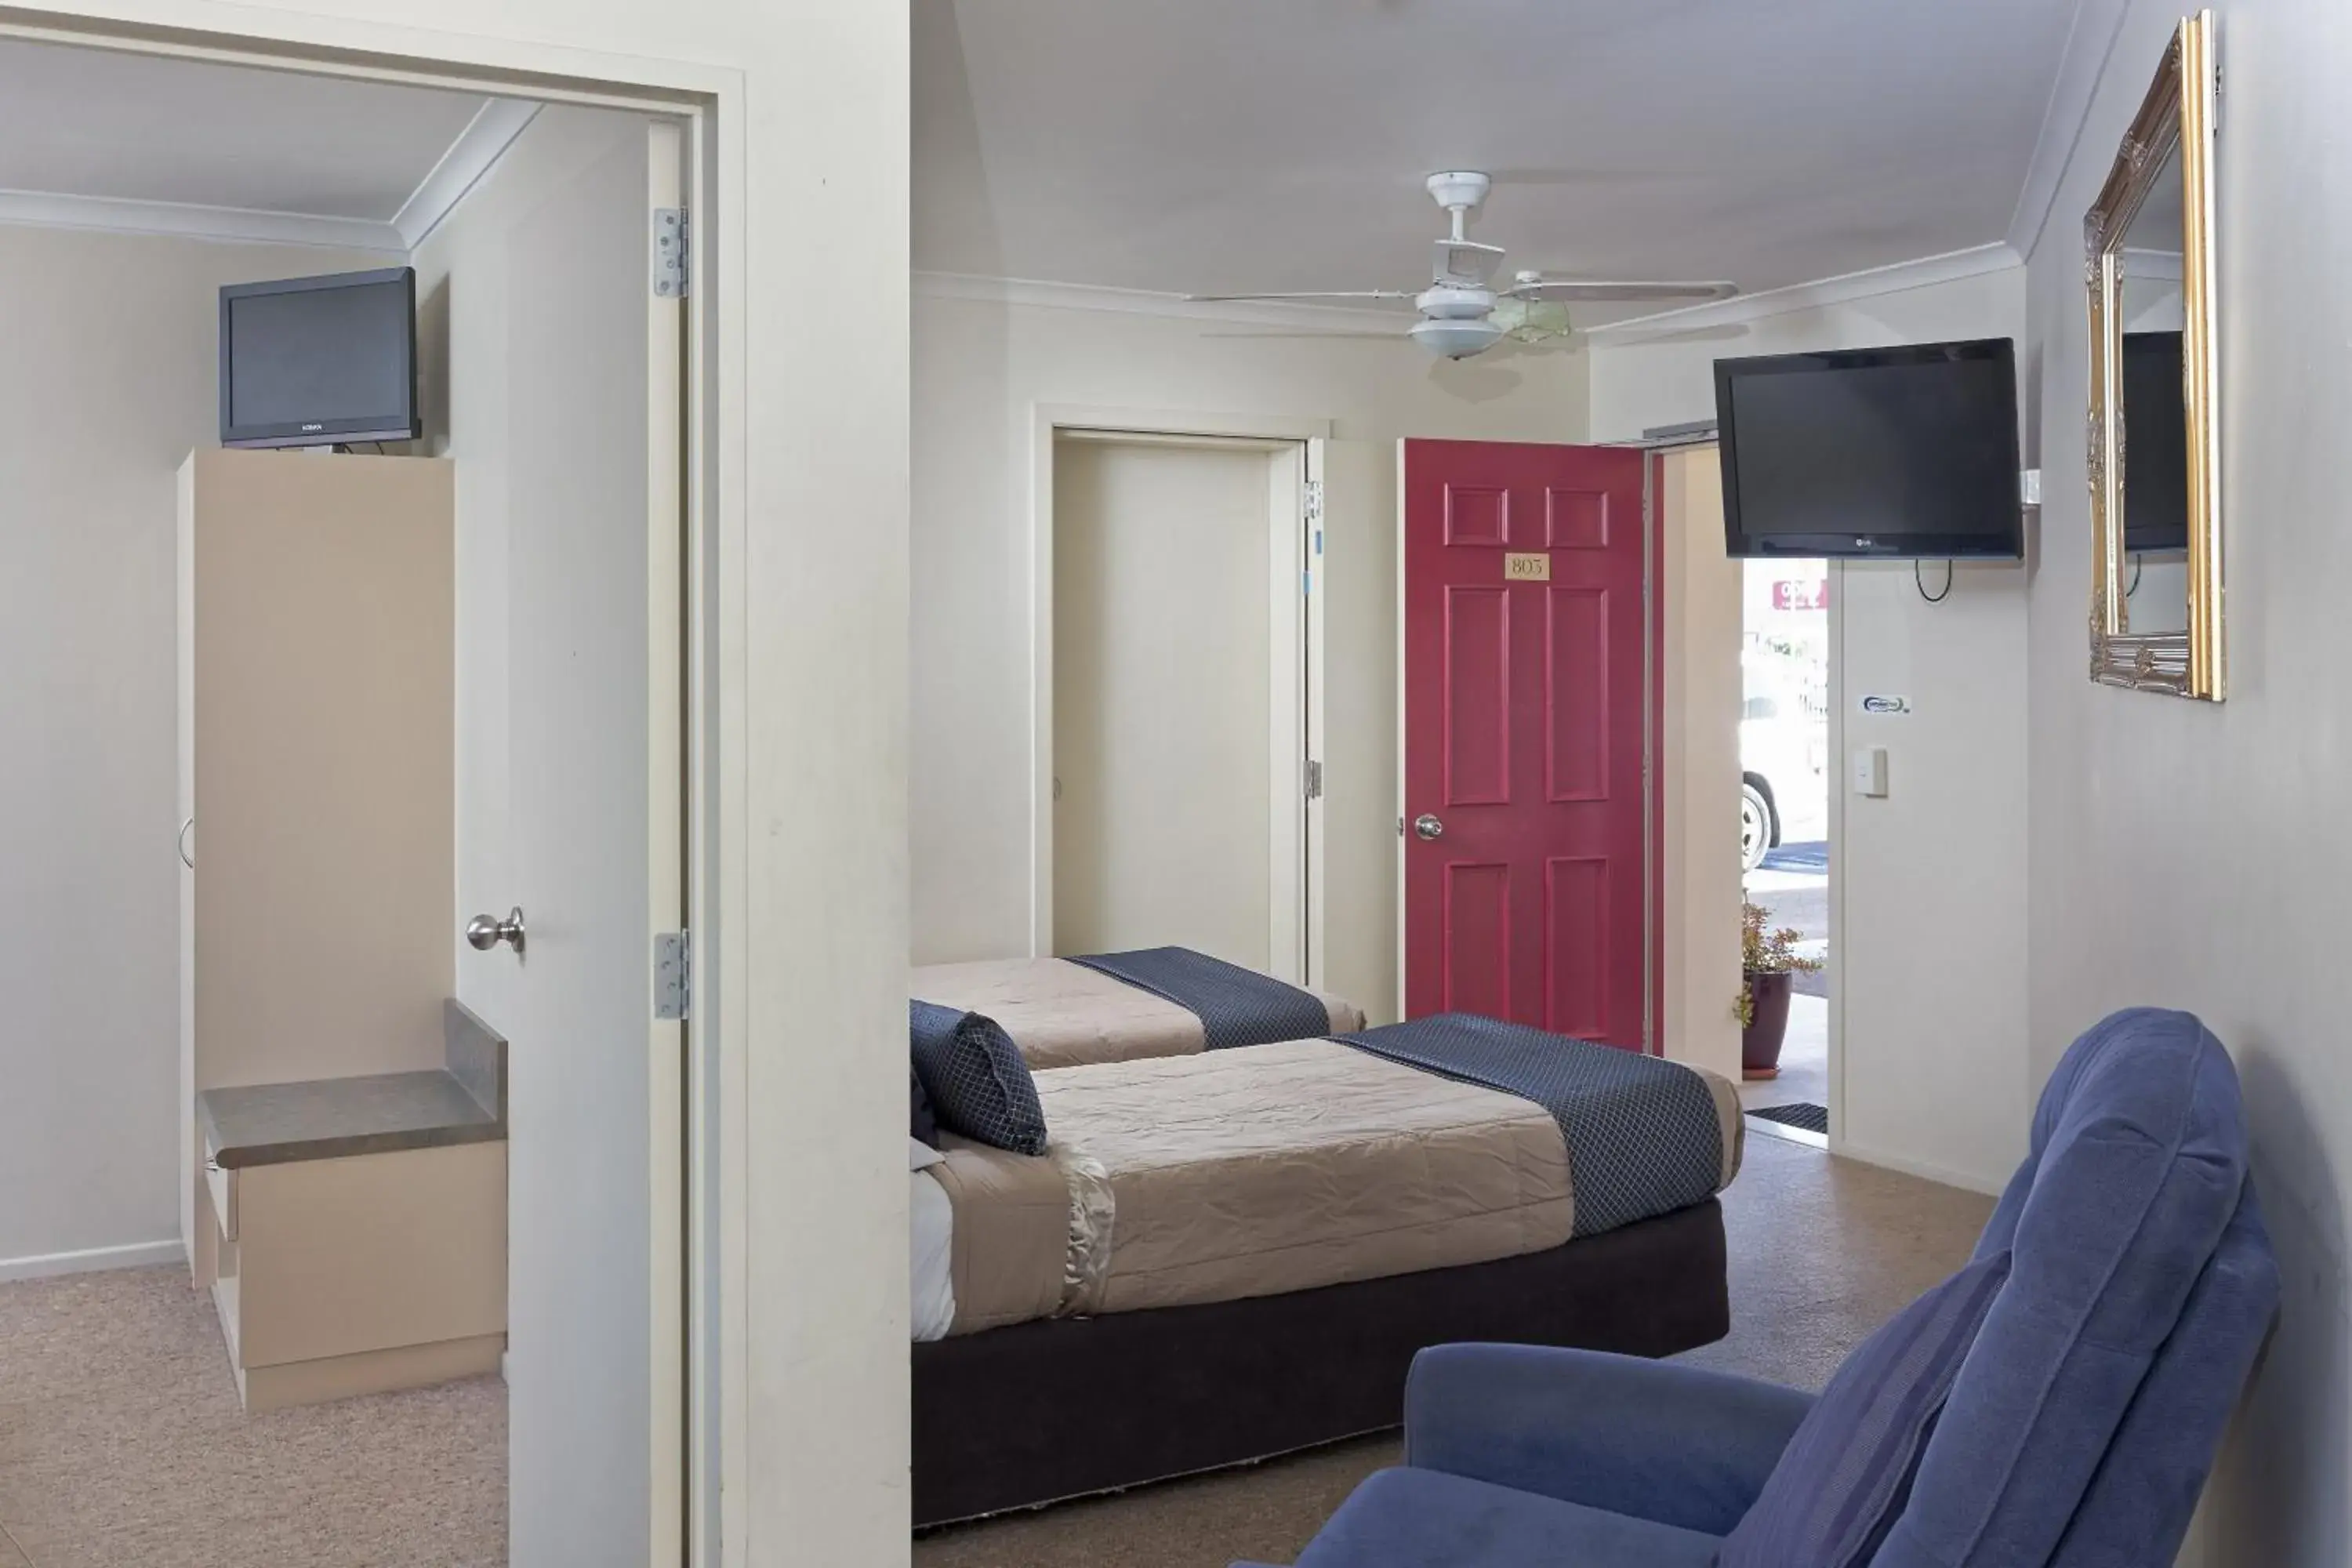 Deluxe One-Bedroom Apartment in BK's Rotorua Motor Lodge